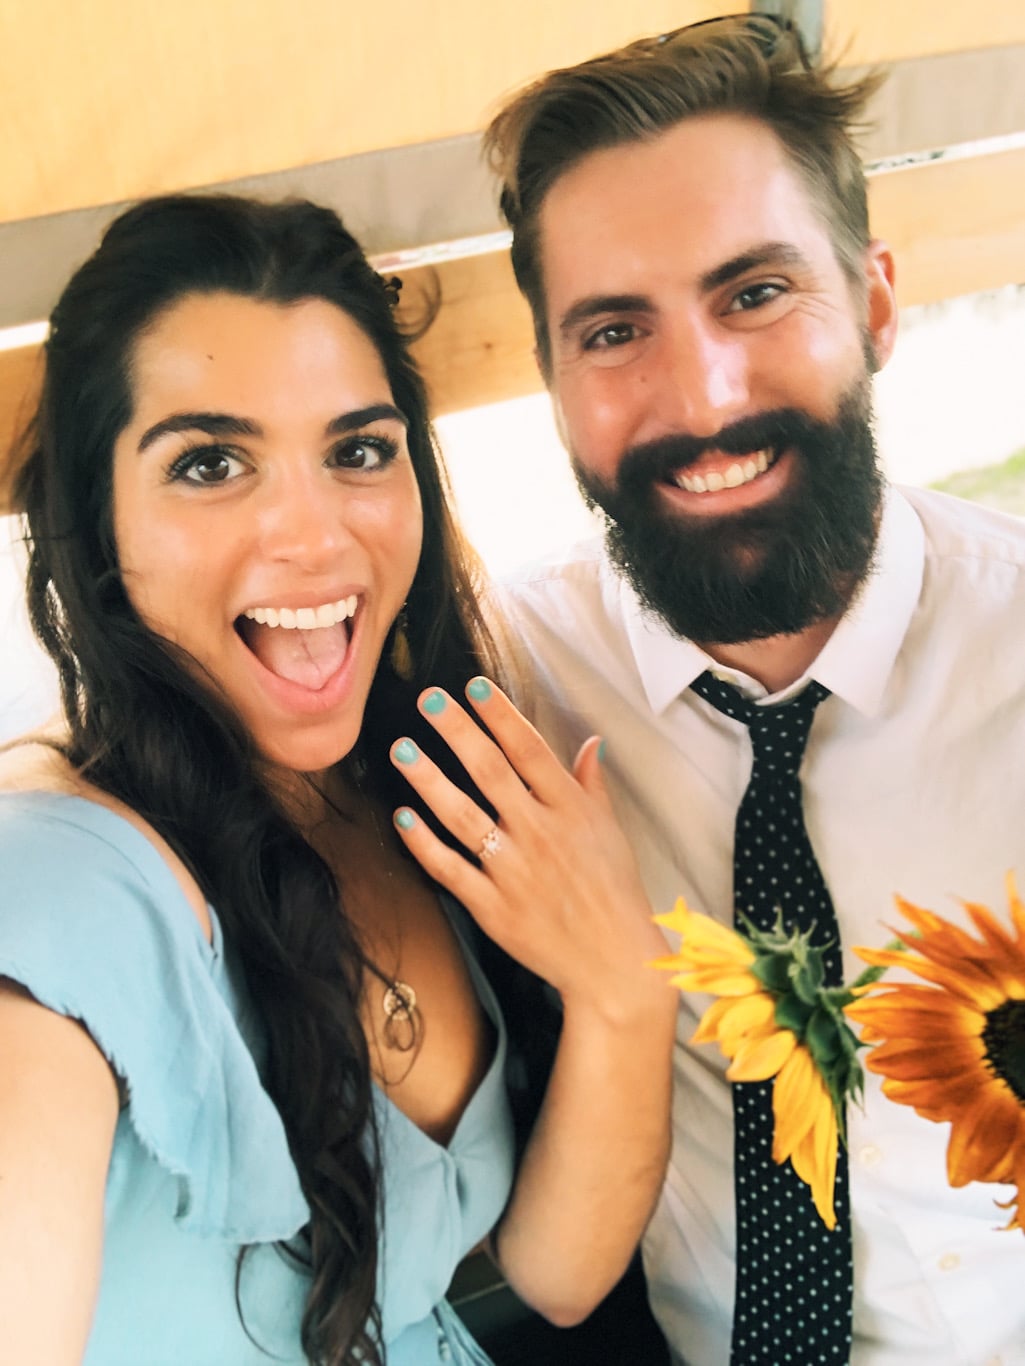 Orlando Florida Sunflower Field Marriage Proposal - 21